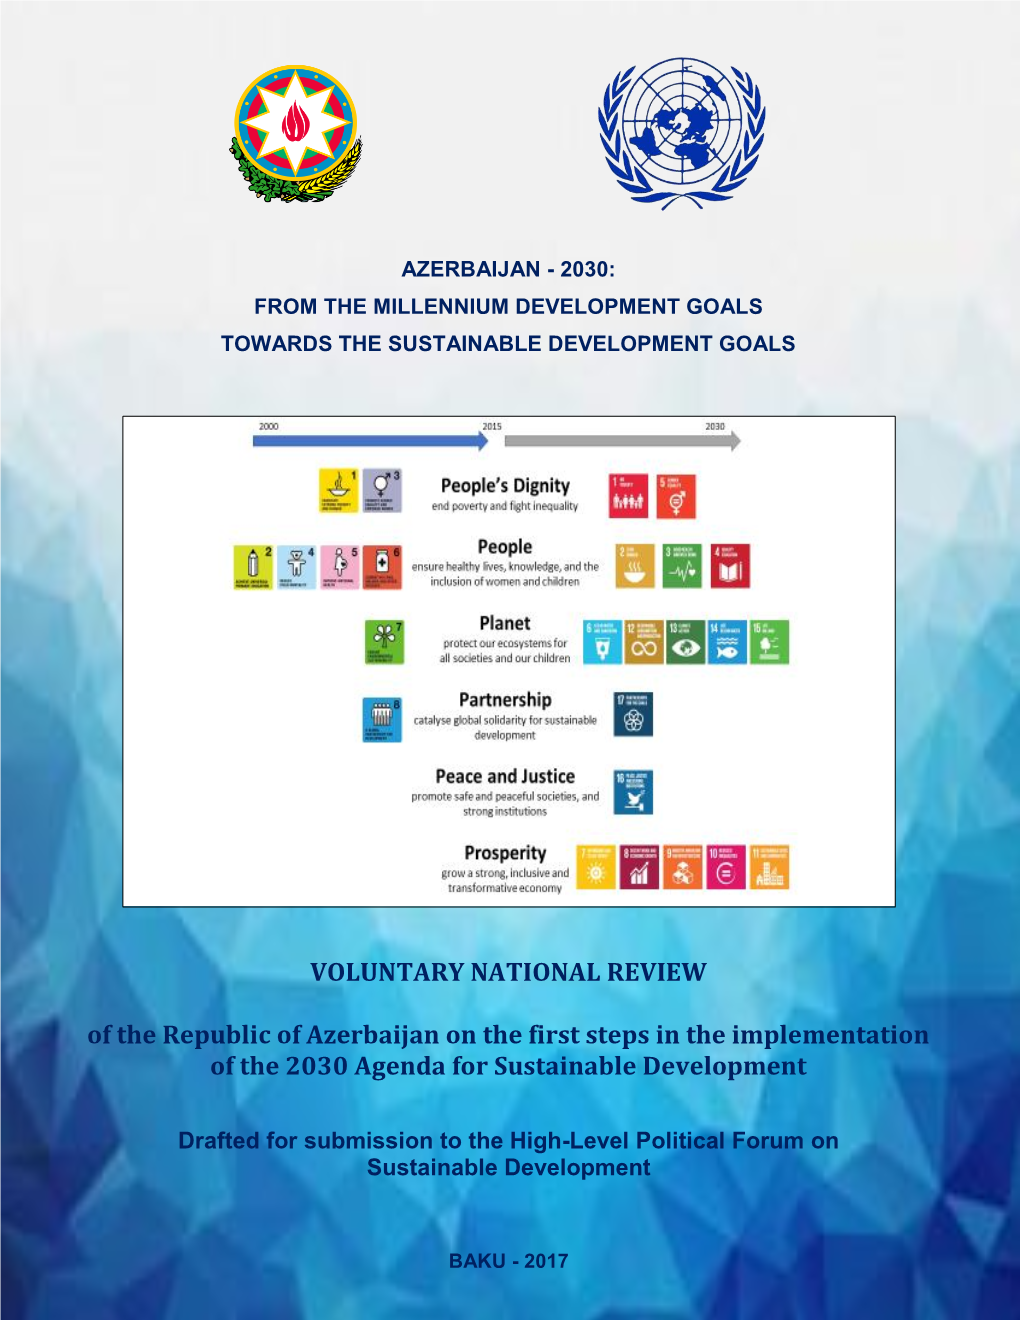 Azerbaijan - 2030: from the Millennium Development Goals Towards the Sustainable Development Goals